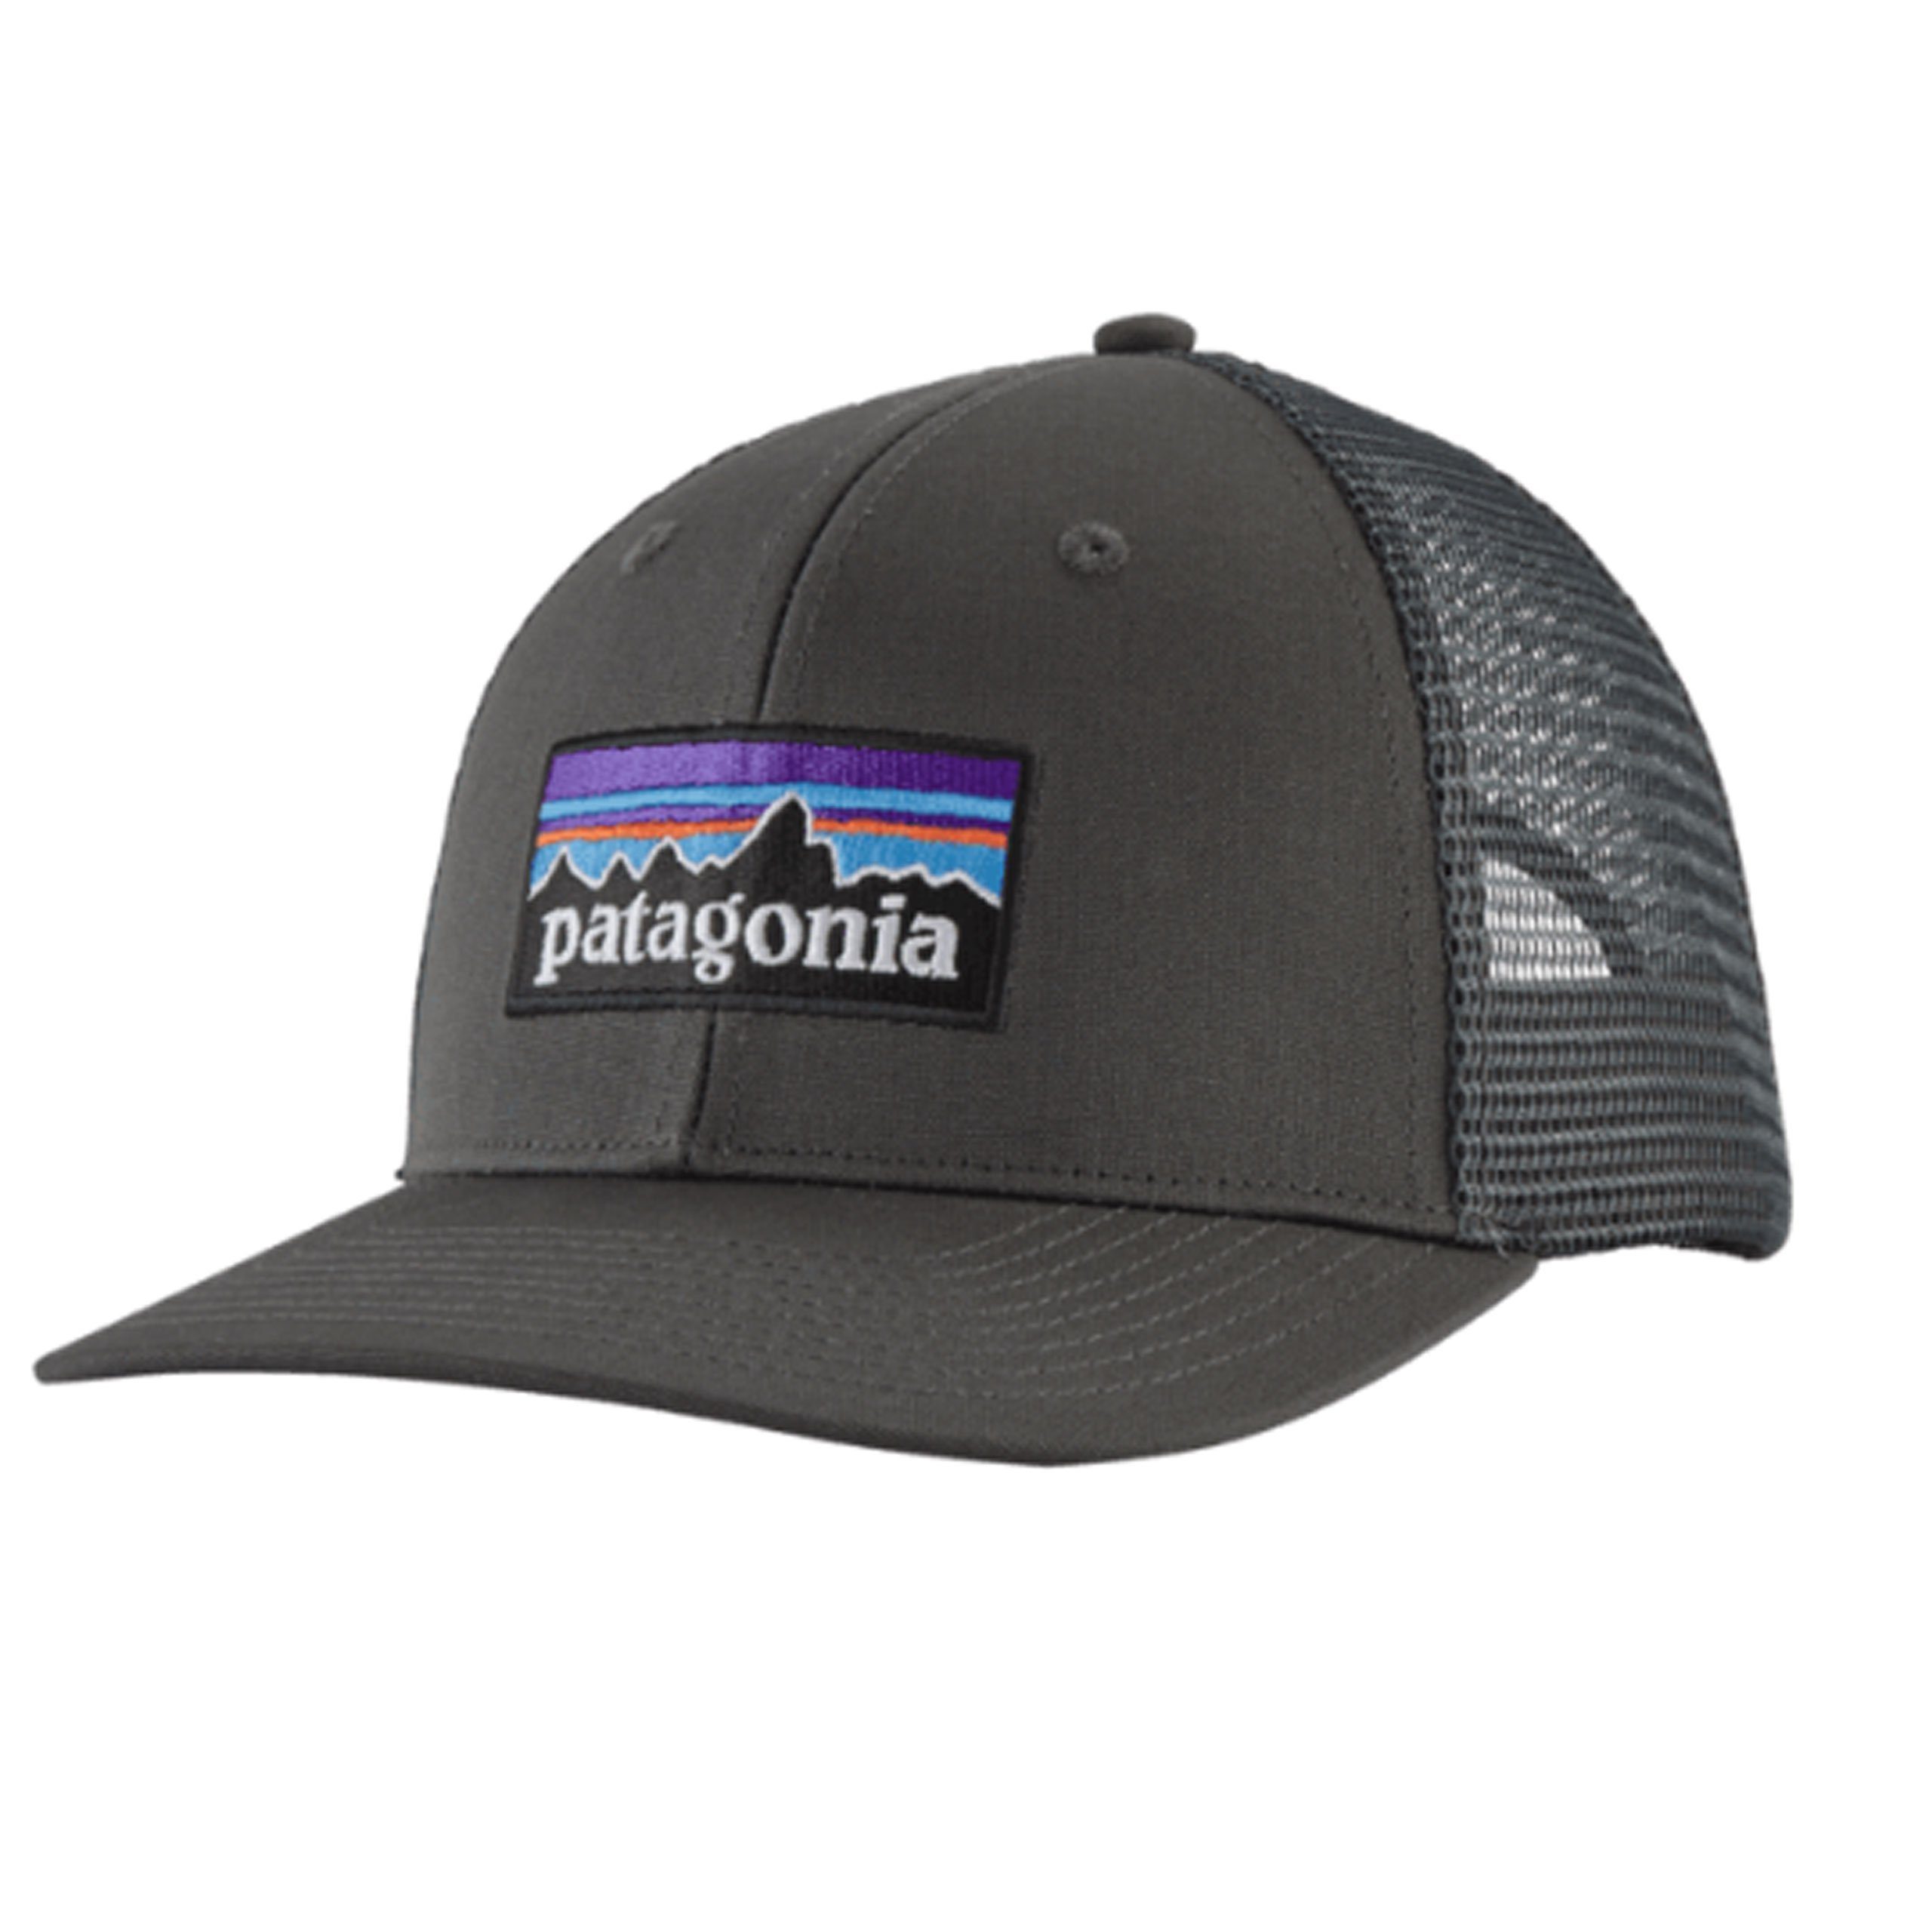 Patagonia Patagonia luftdurchlässige grey Trucker Cap - Truckercap/Baseballkappe forge Baseball Hat P-6